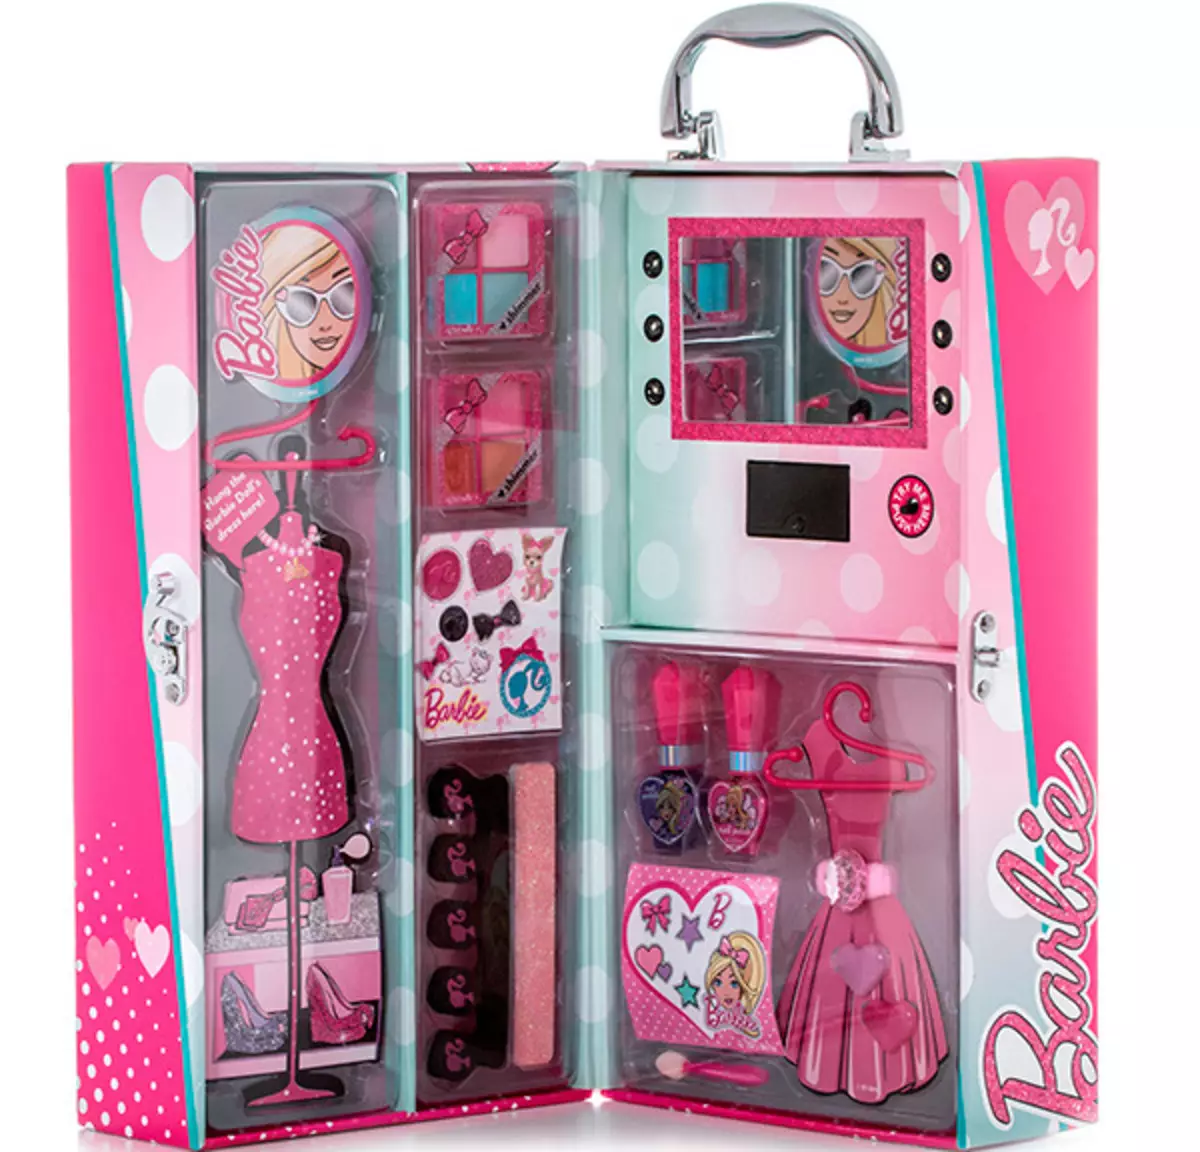 Markwins Barbie набор детской декоративной косметики